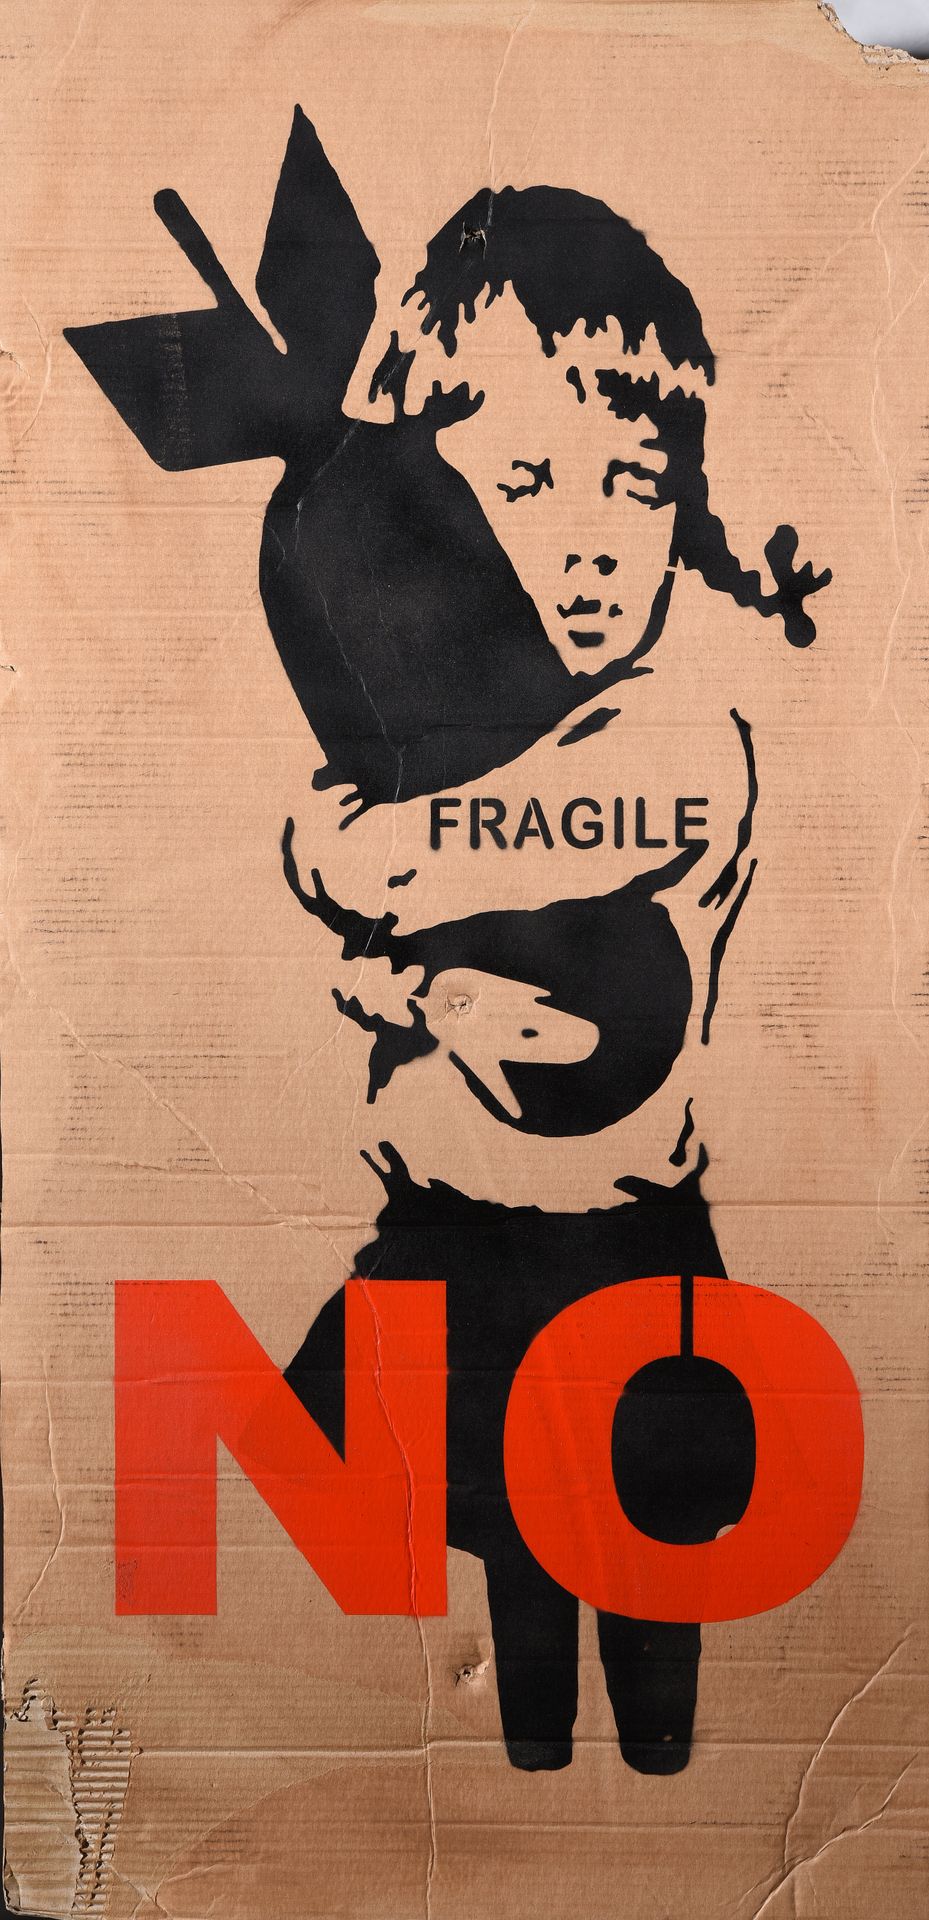 Null 班克西 (1974年出生)

炸弹袭击者, 2003

喷漆，纸板上的模板

背面的标签是 "停止战争

2003年2月15日星期六演示

119 x&hellip;